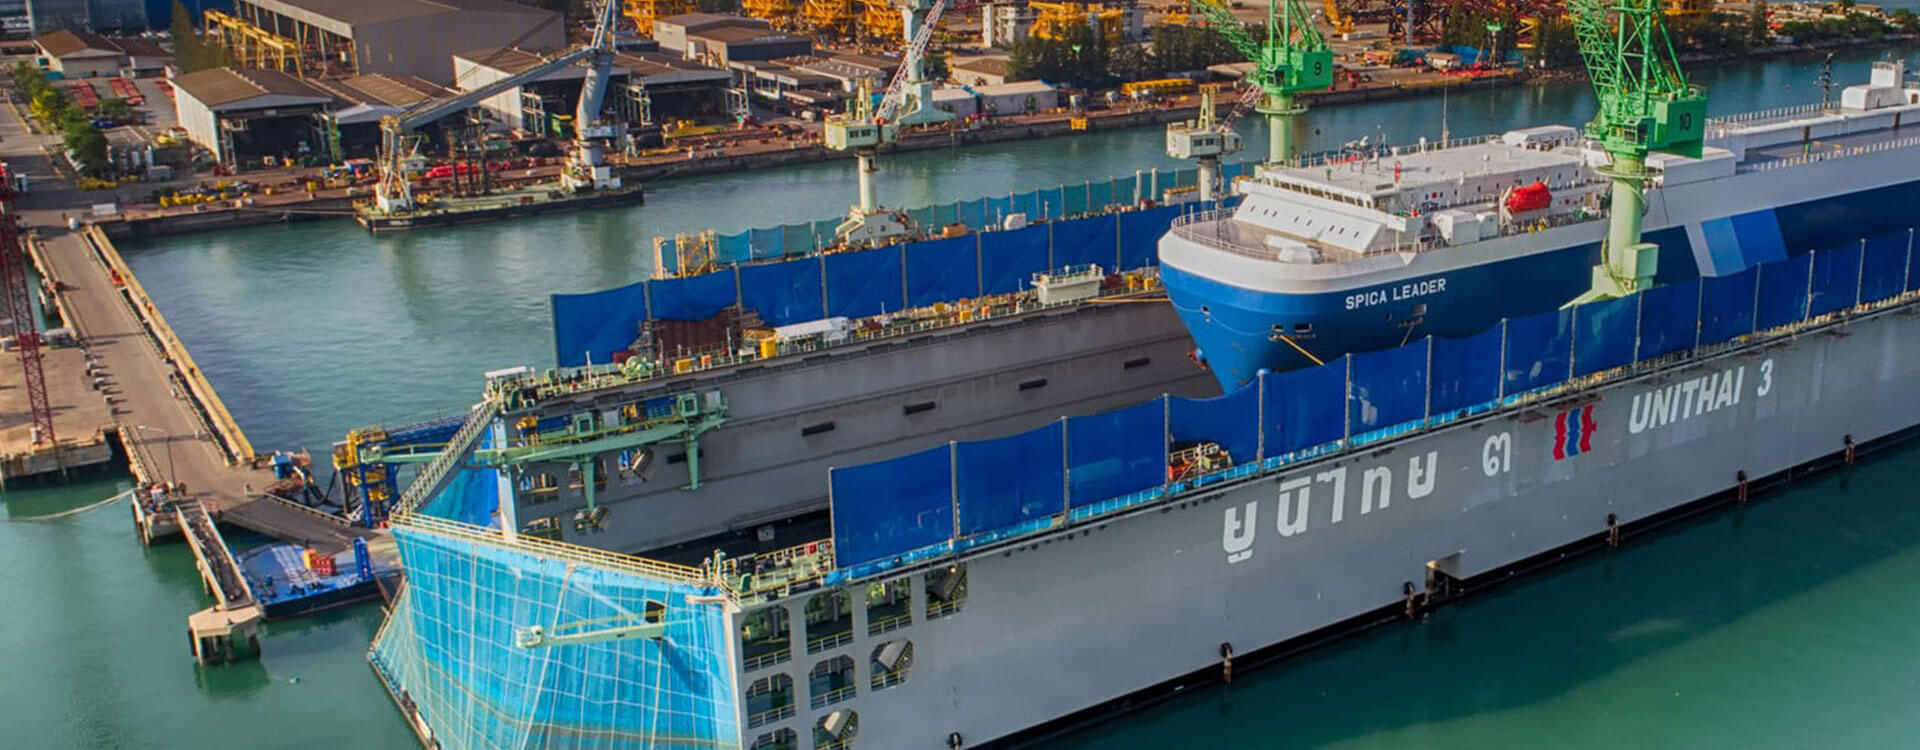 Marine-Offshore-Engineering-2-Unithai-Shipyard1a